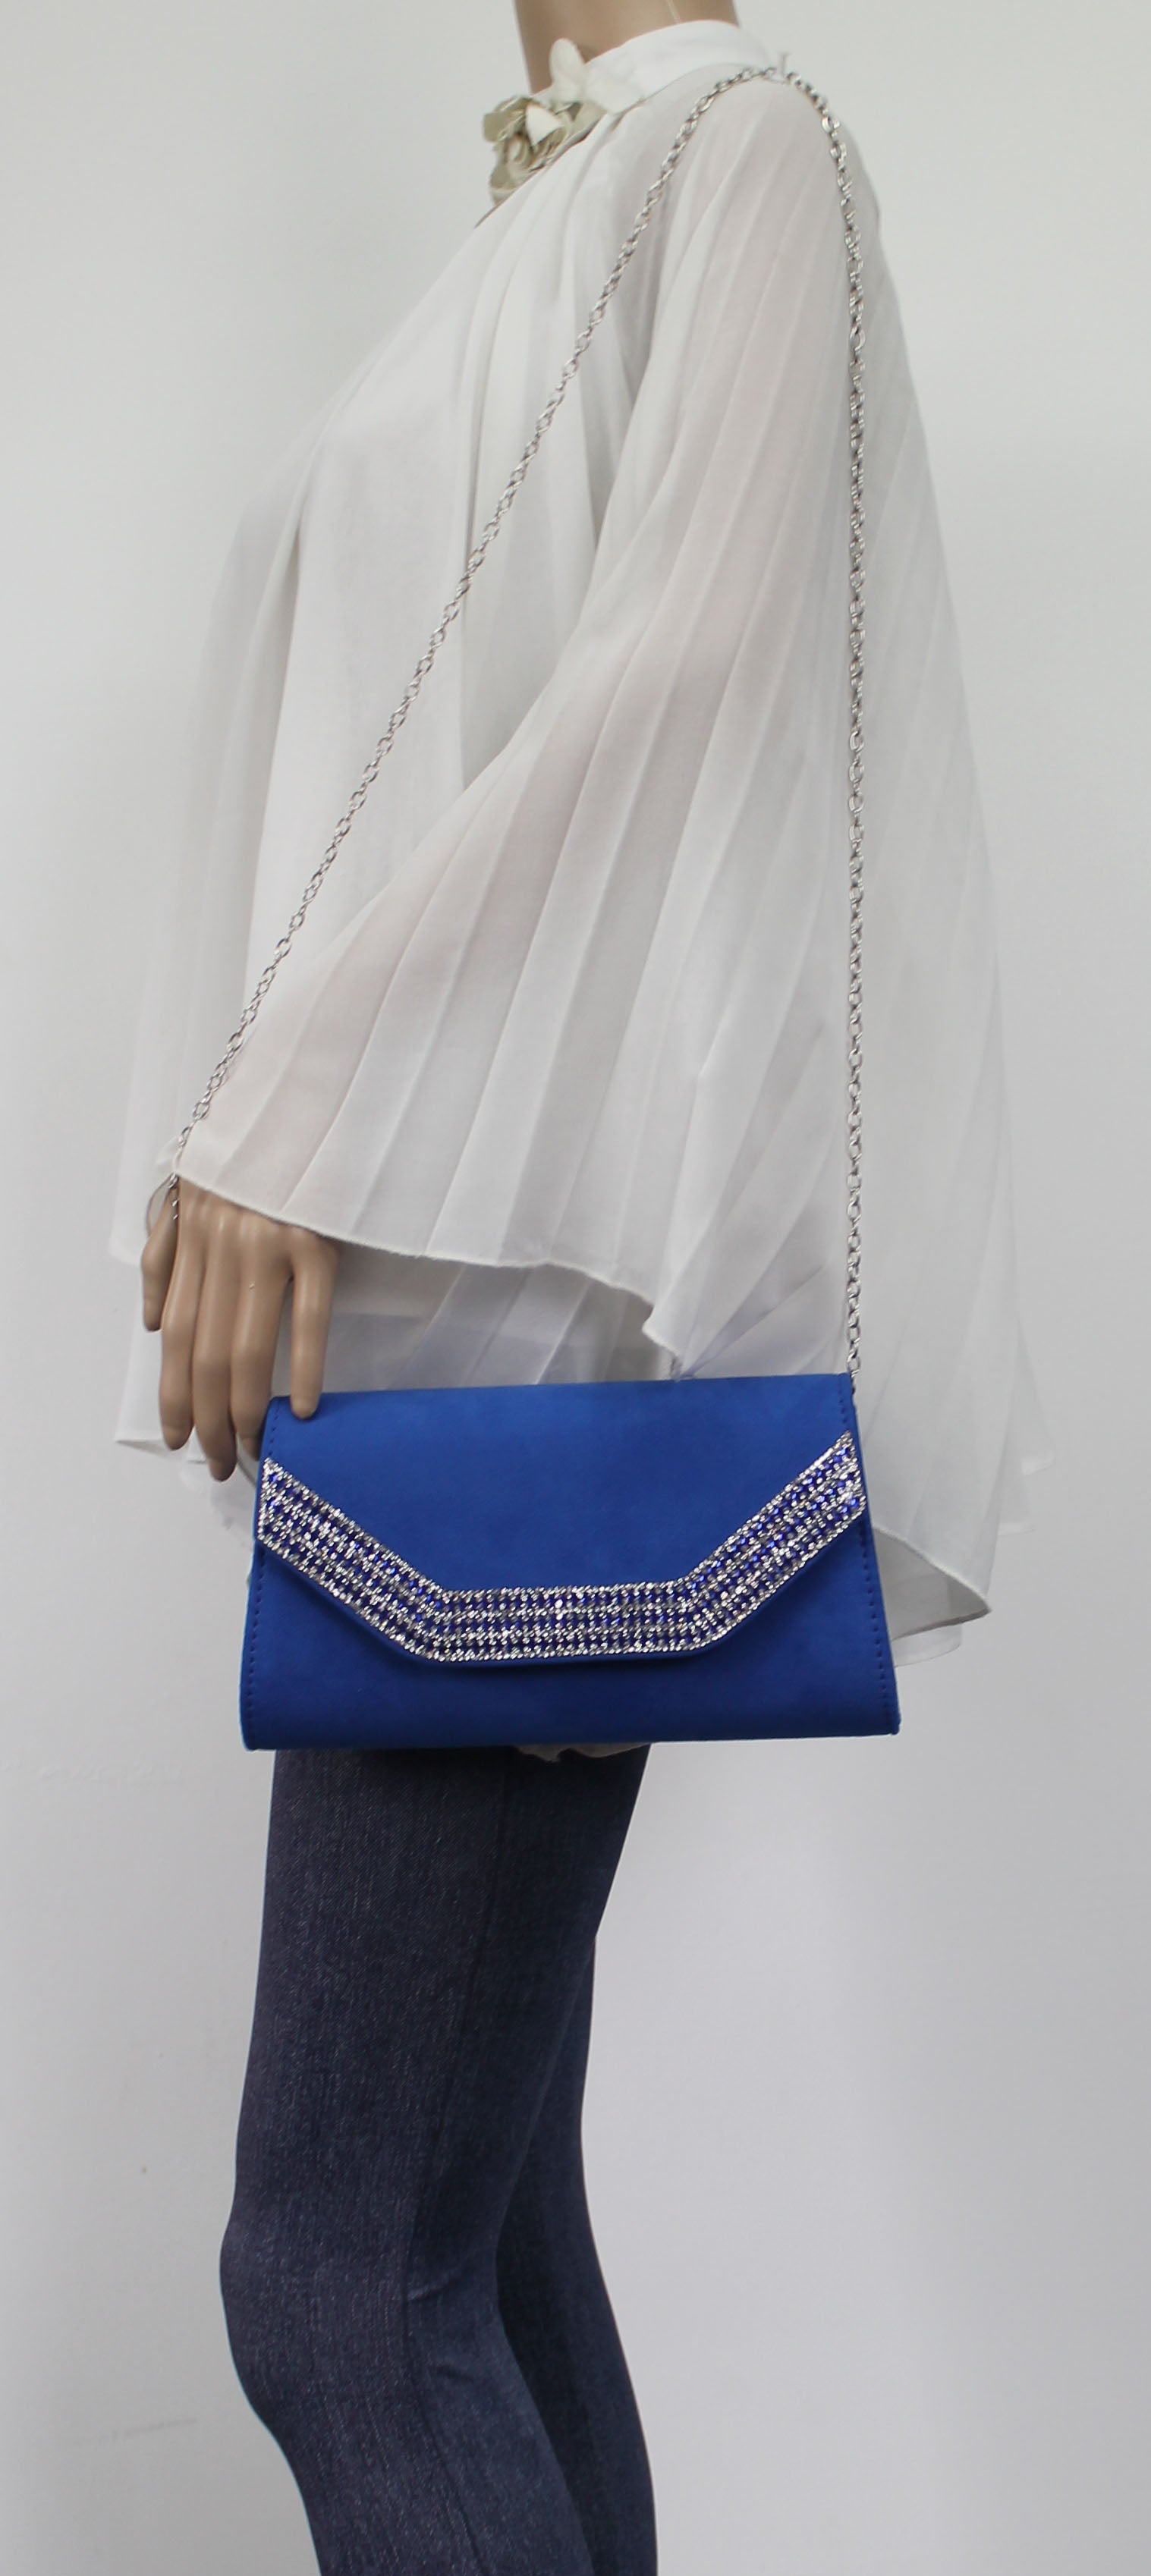 SWANKYSWANS Harper Clutch Bag Royal Blue Cute Cheap Clutch Bag For Weddings School and Work